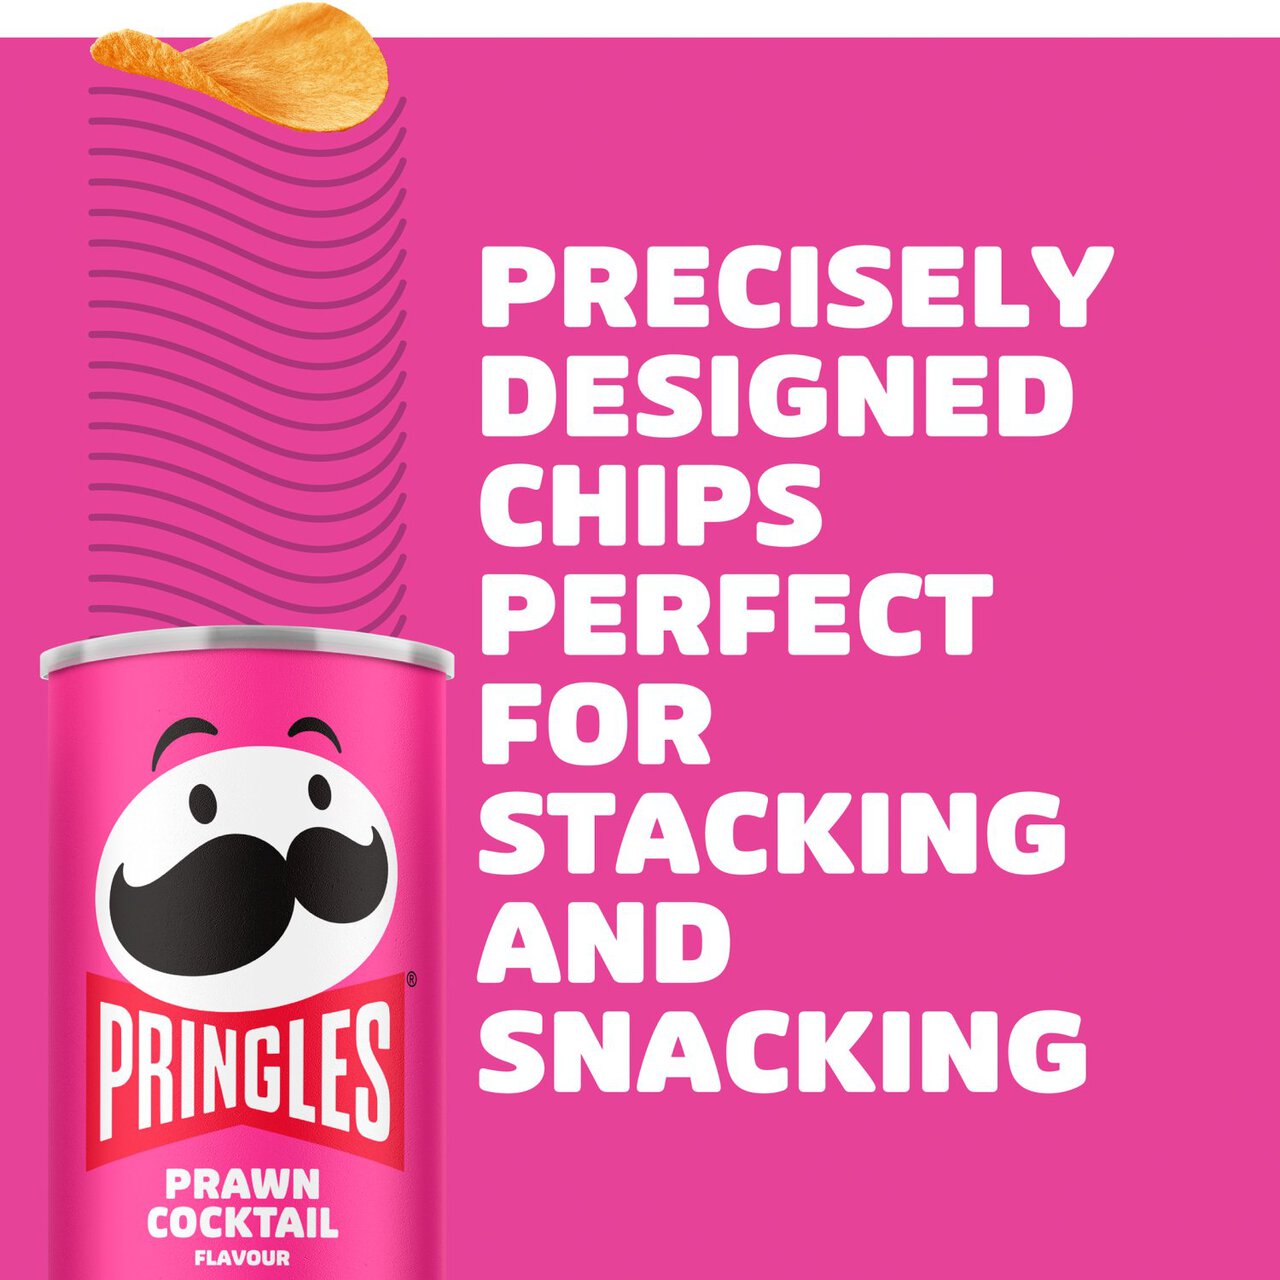 Pringles Prawn Cocktail Flavour Sharing Crisps 200g